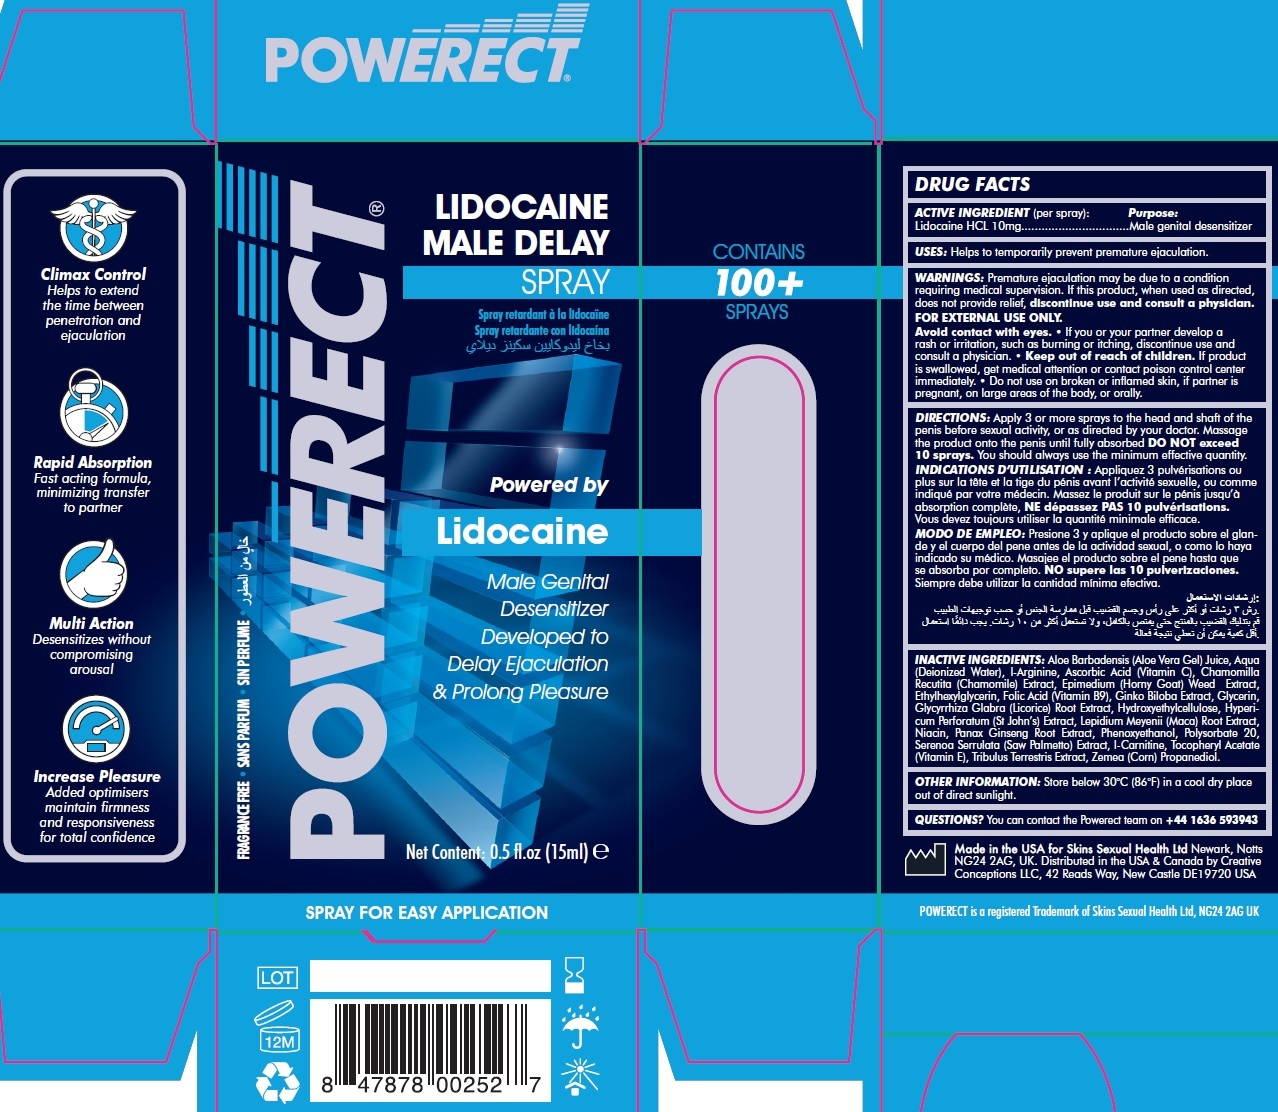 POWERECT Lidocaine Male Delay Spray